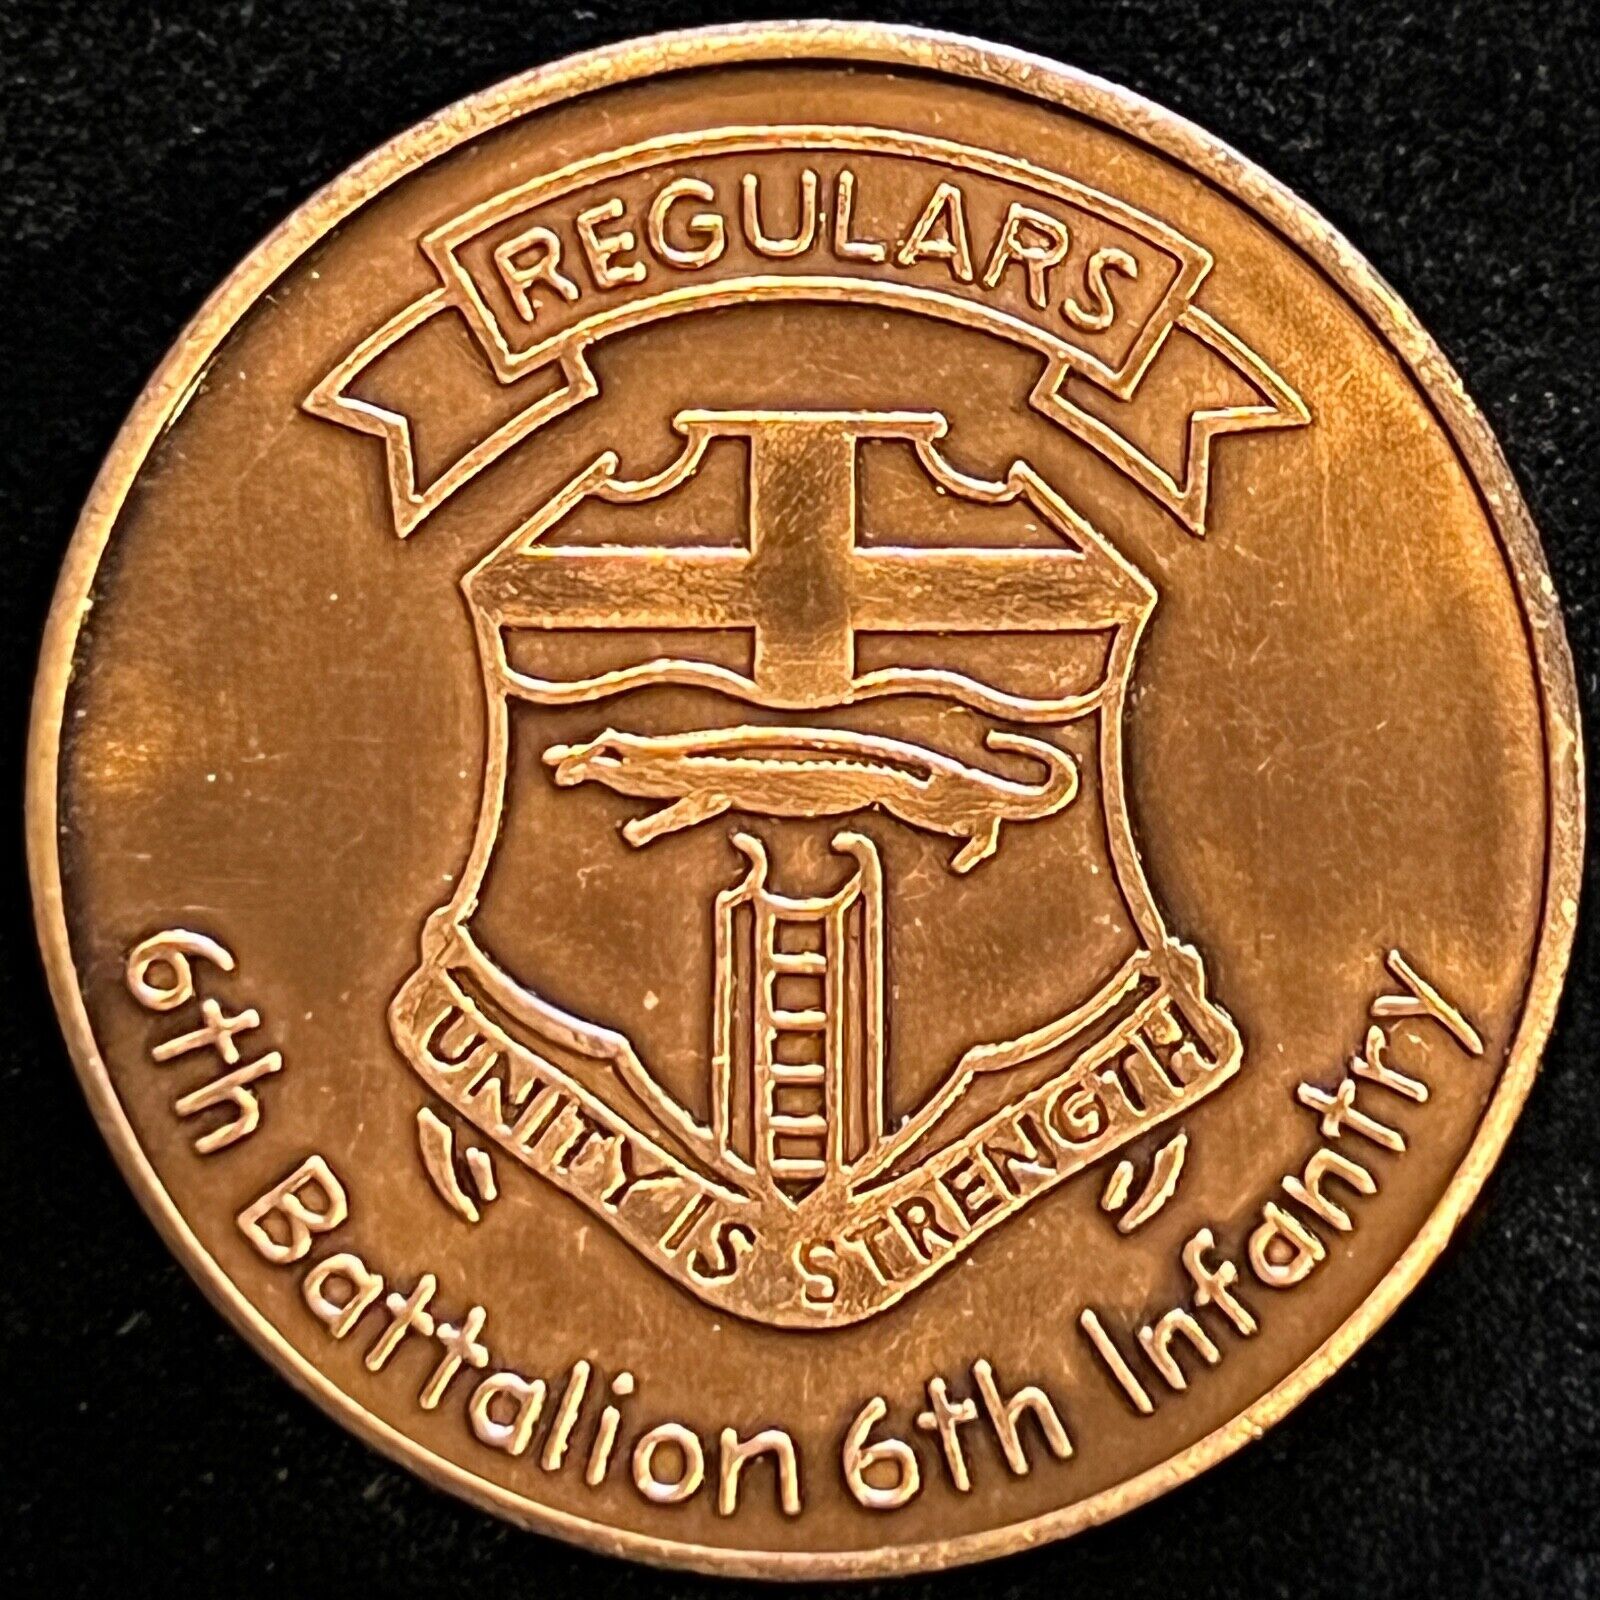 6th Battalion 6th Infantry Fightin' Regulars Vintage Challenge Coin